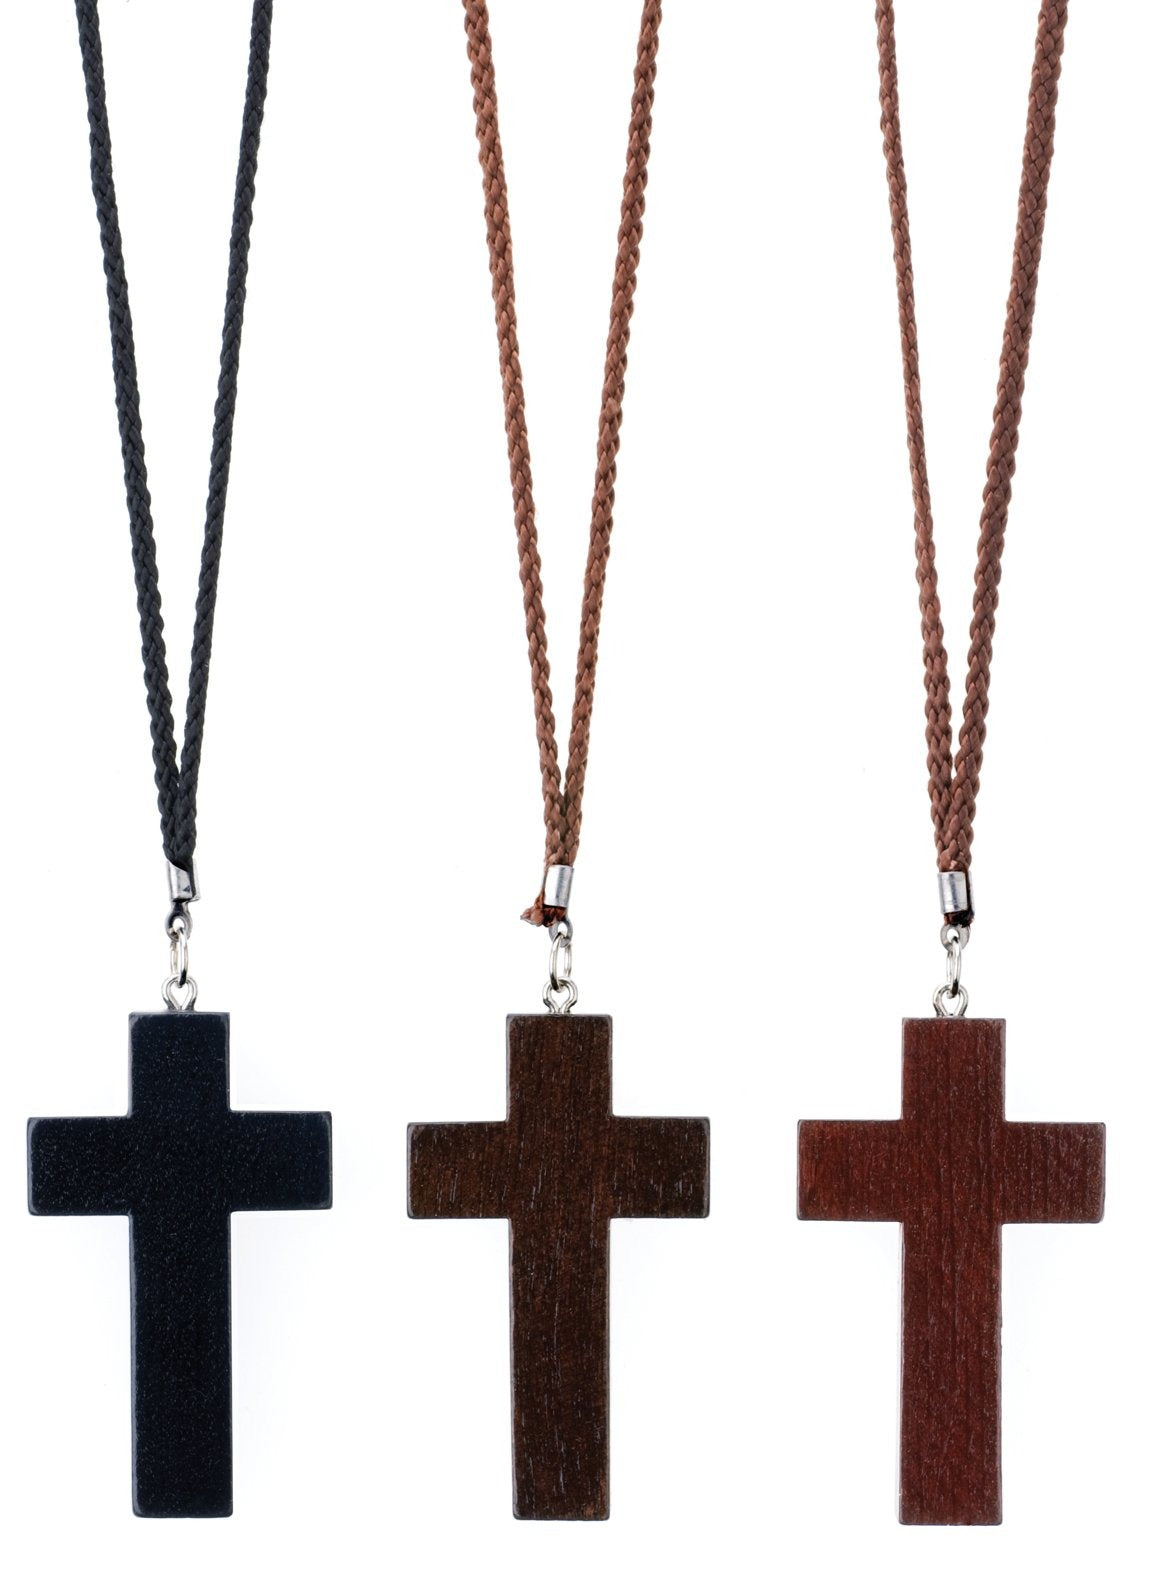 Black Wooden Cross